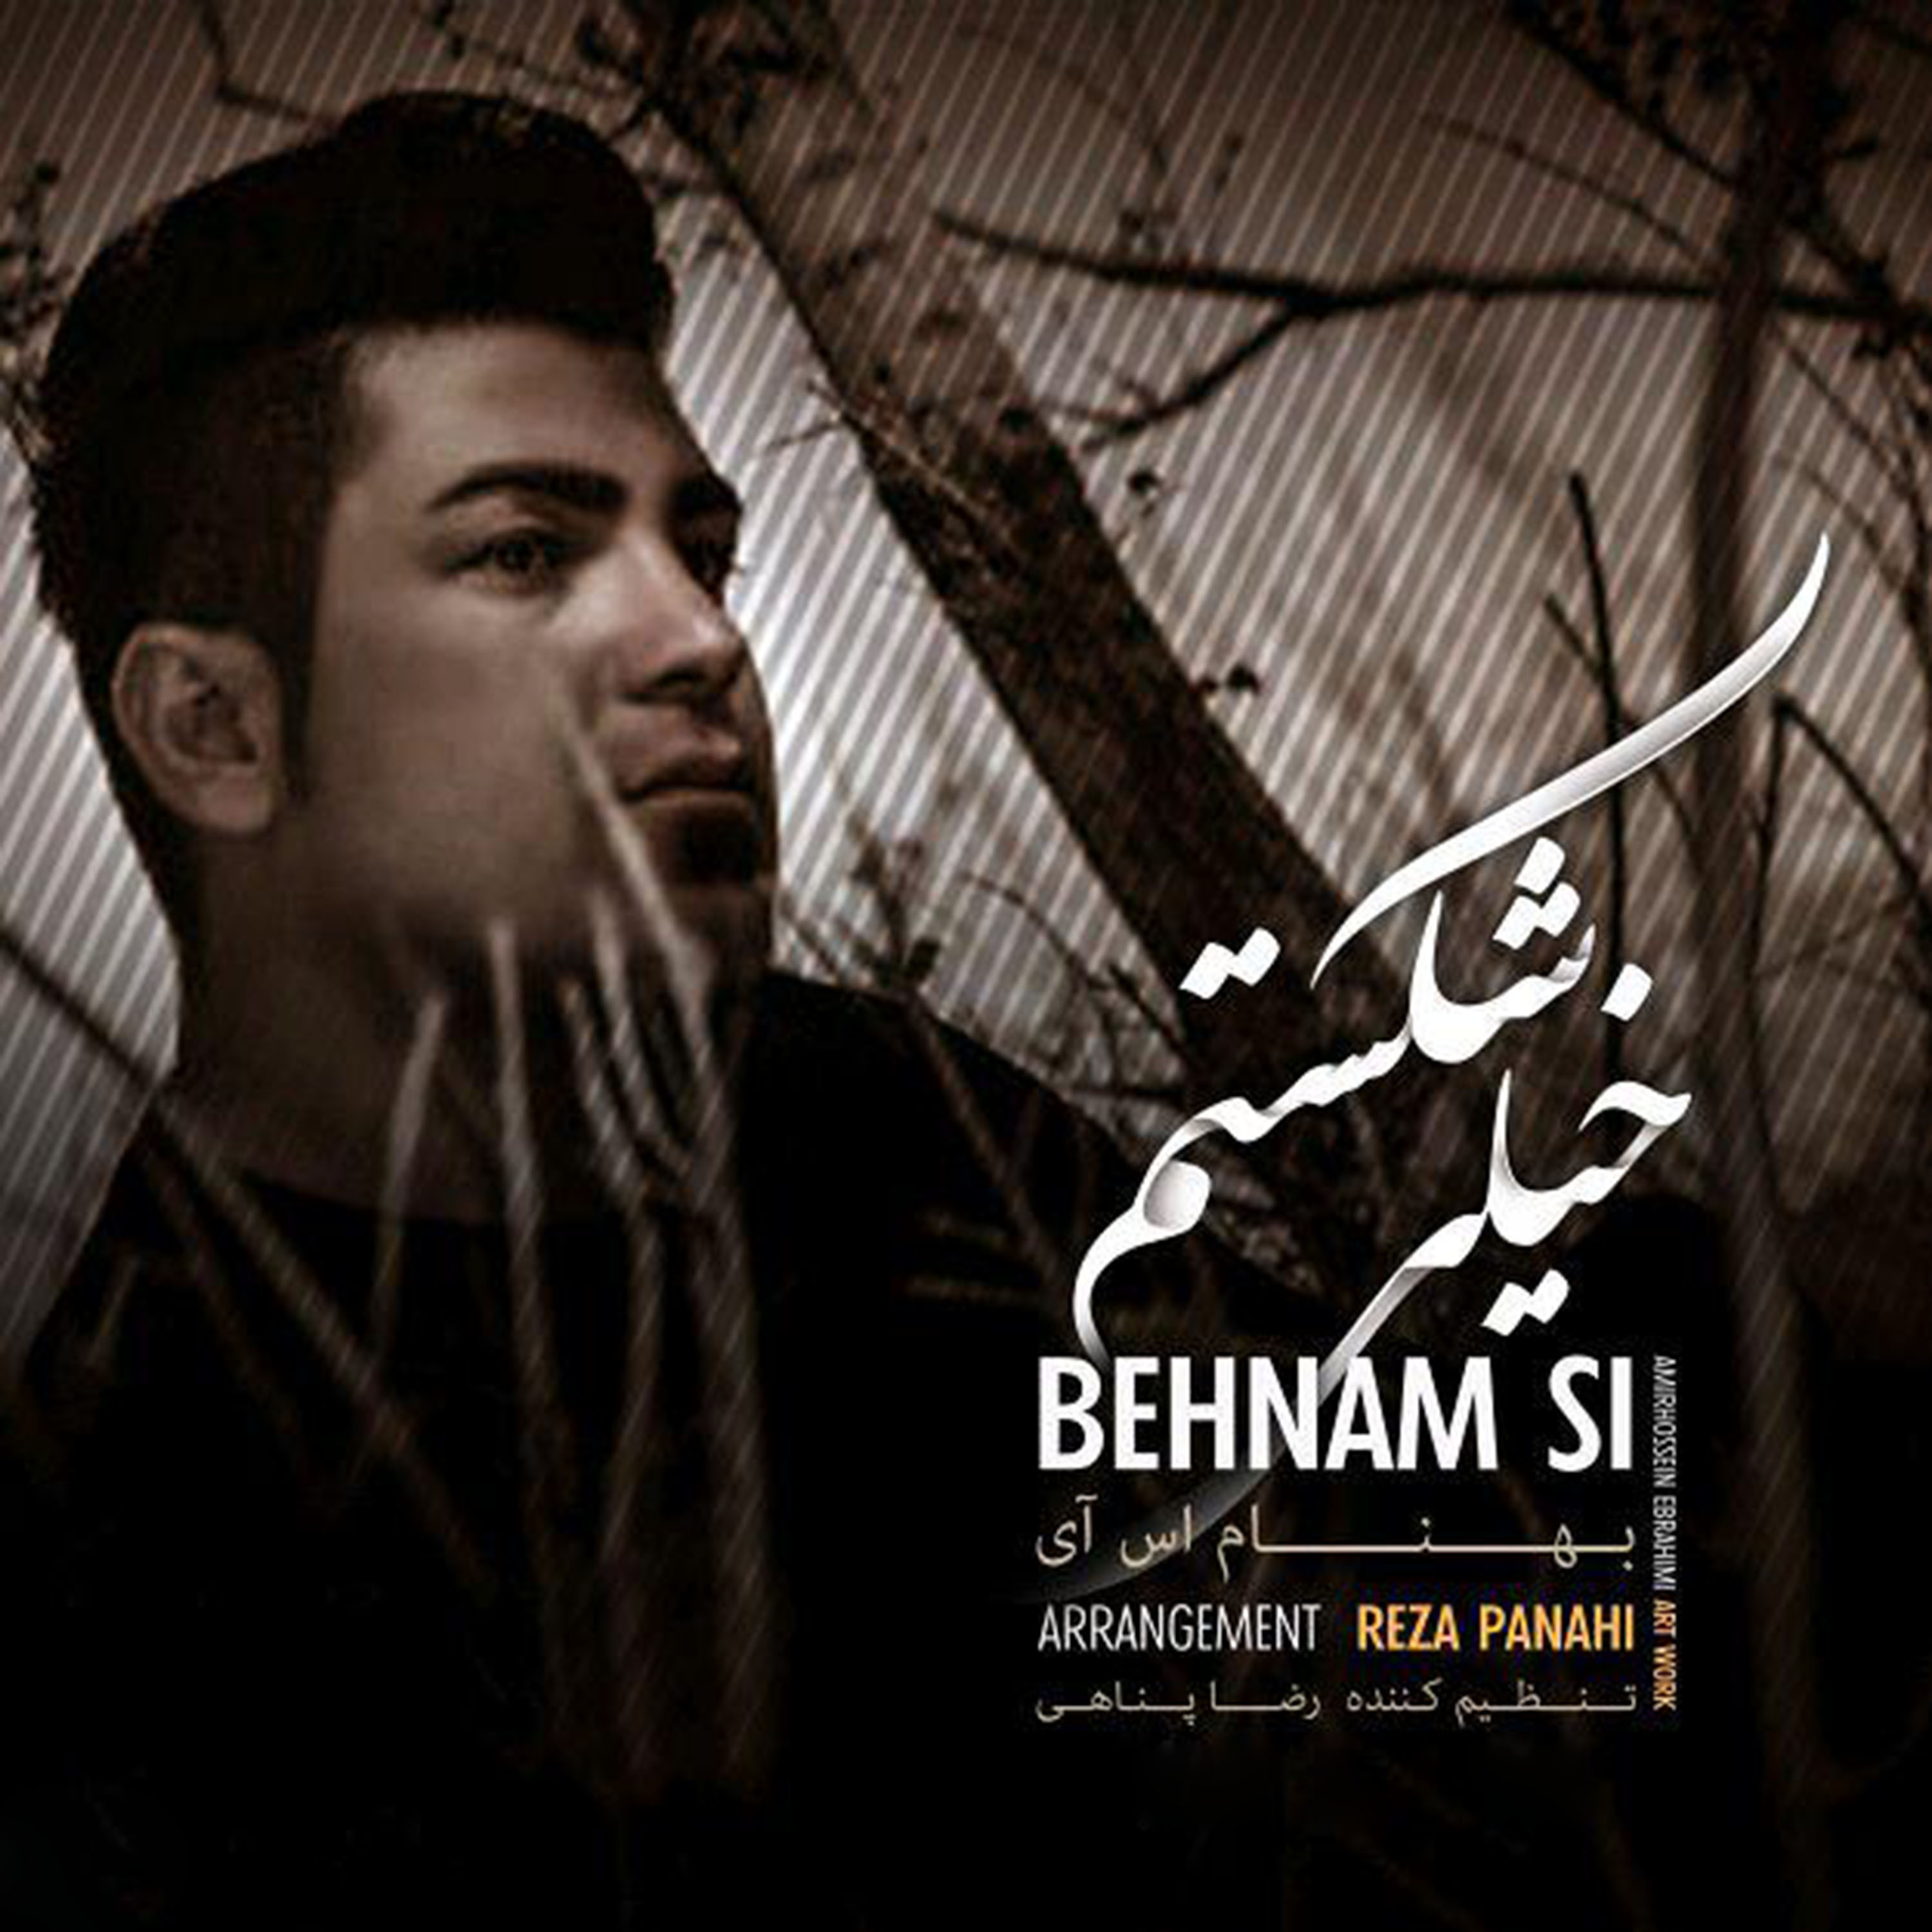  دانلود آهنگ جدید بهنام اِس آی - خیلی شکستم | Download New Music By Behnam Si - Kheyli Shekastam